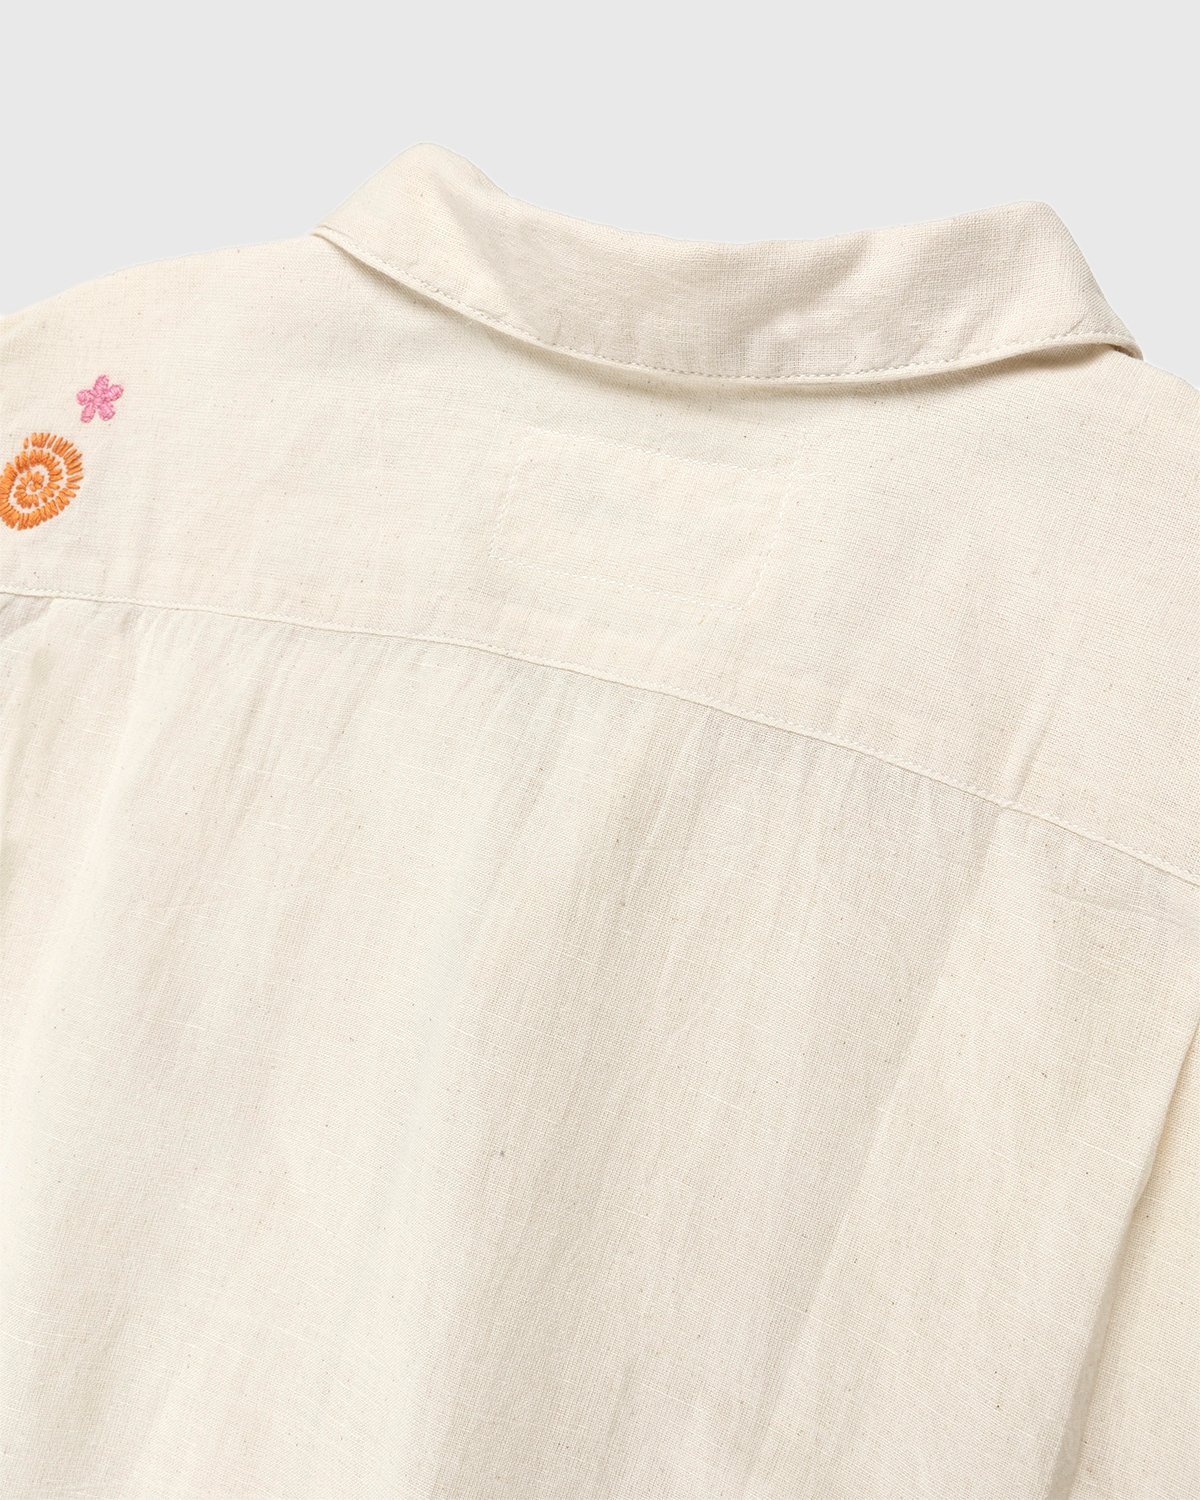 Story mfg. - Greetings Shirt Ecru Harvest Sun Off-White - Clothing - Beige - Image 3